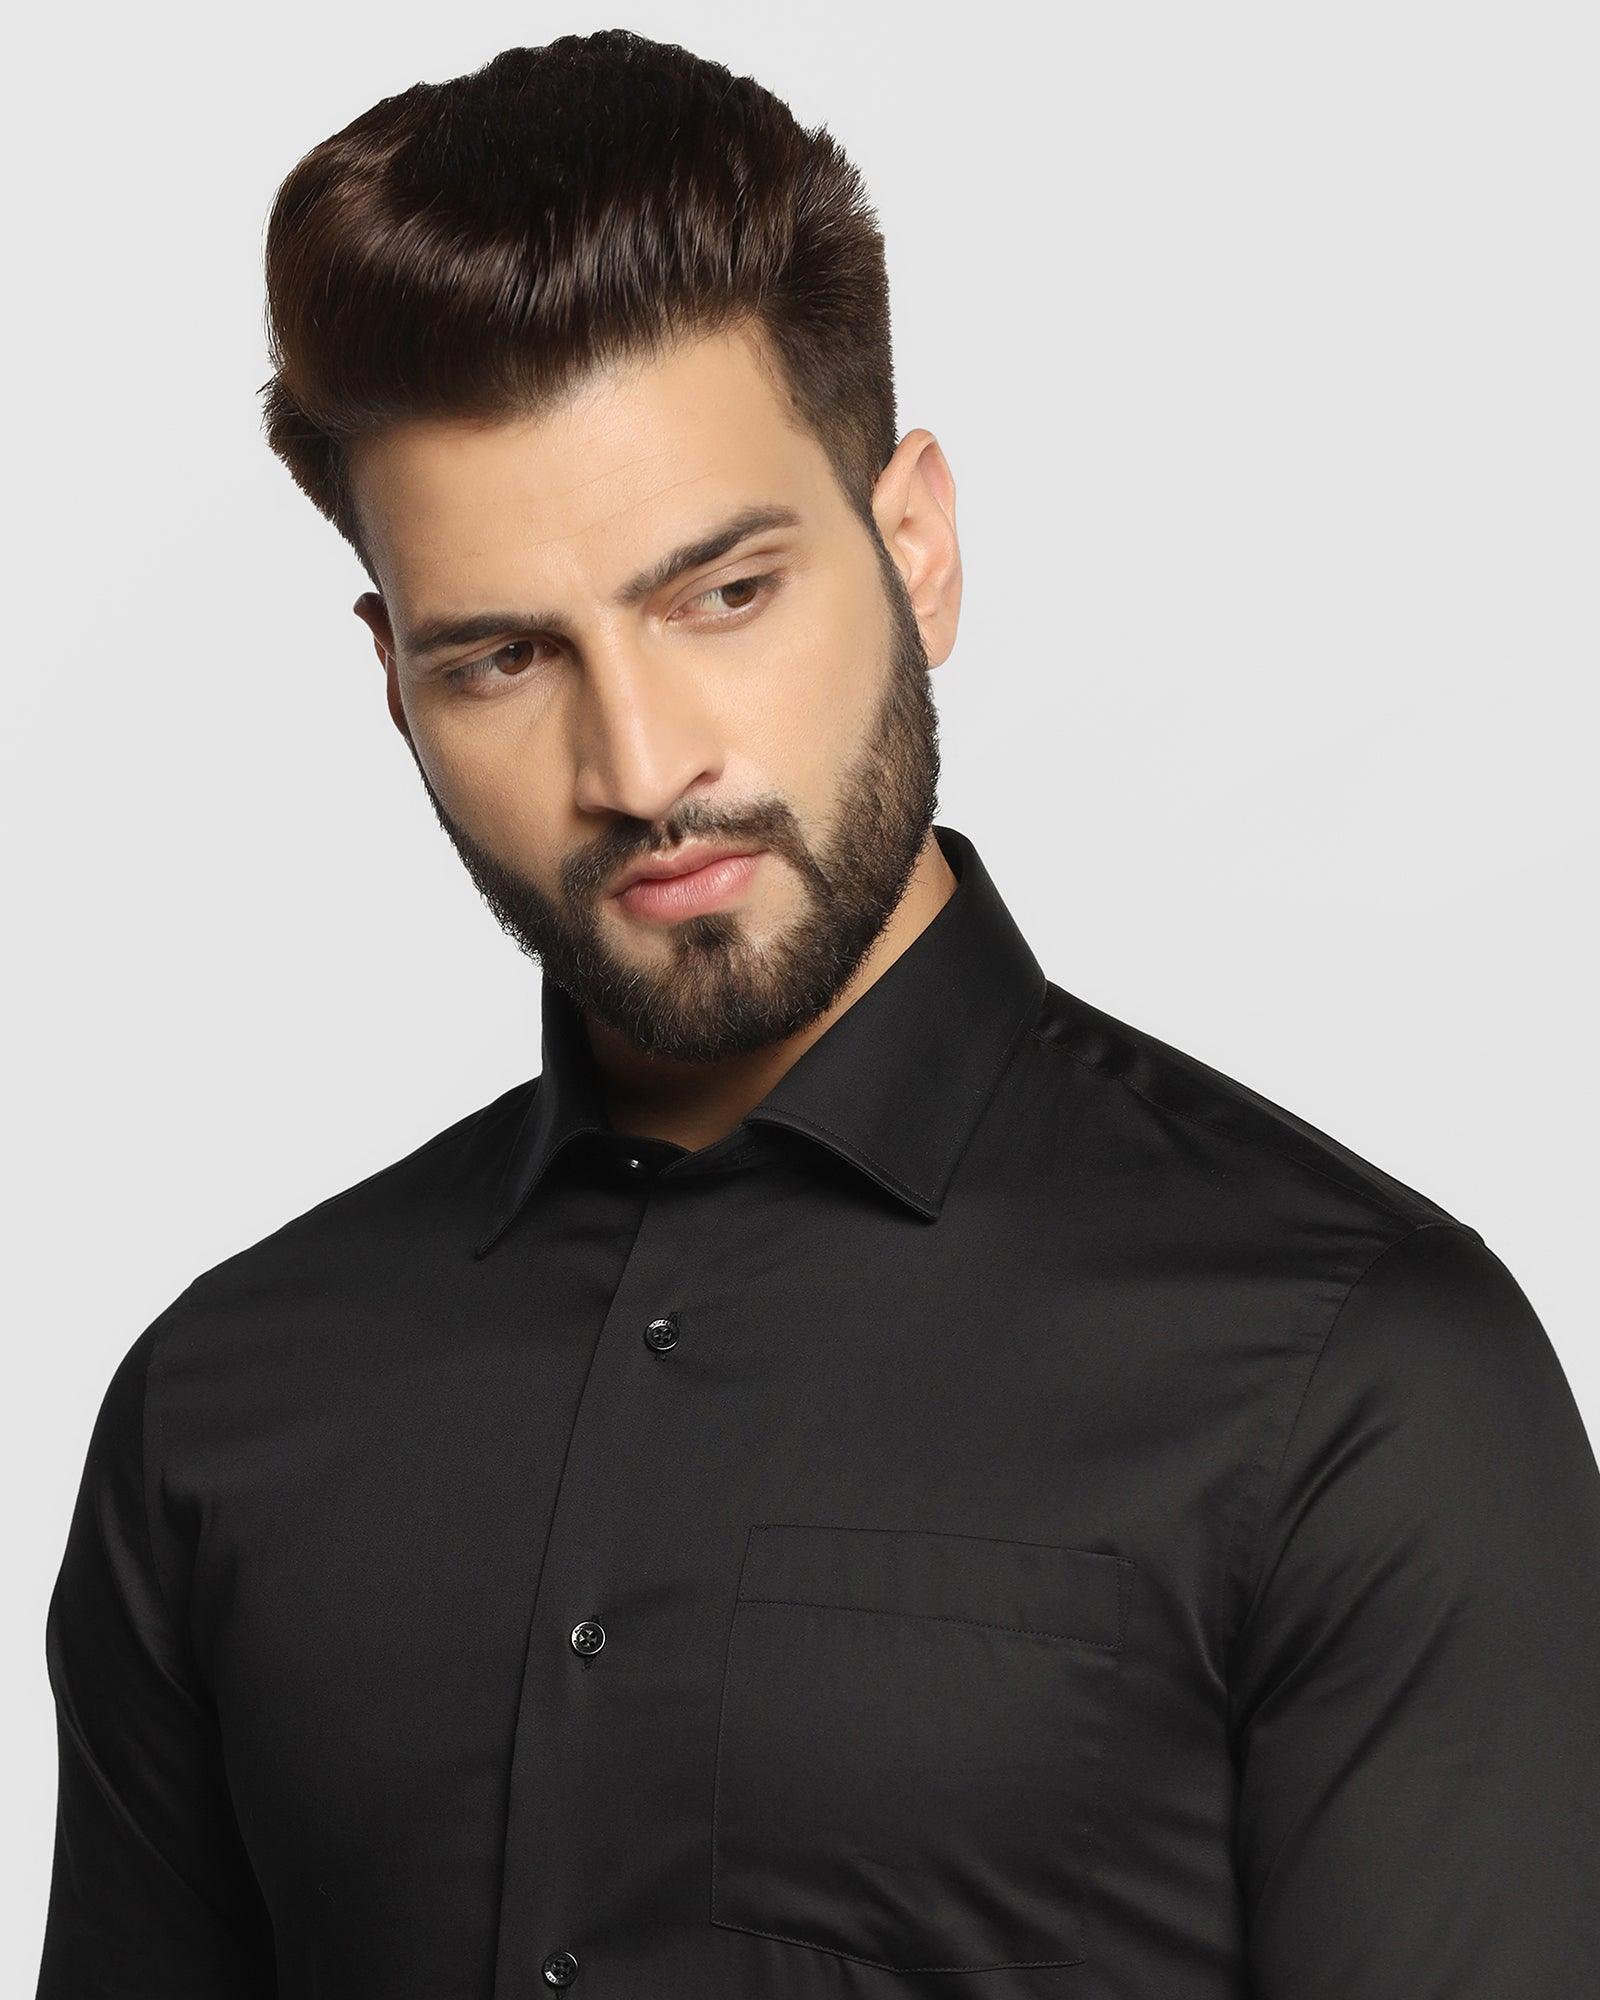 Formal Black Solid Shirt - Simble